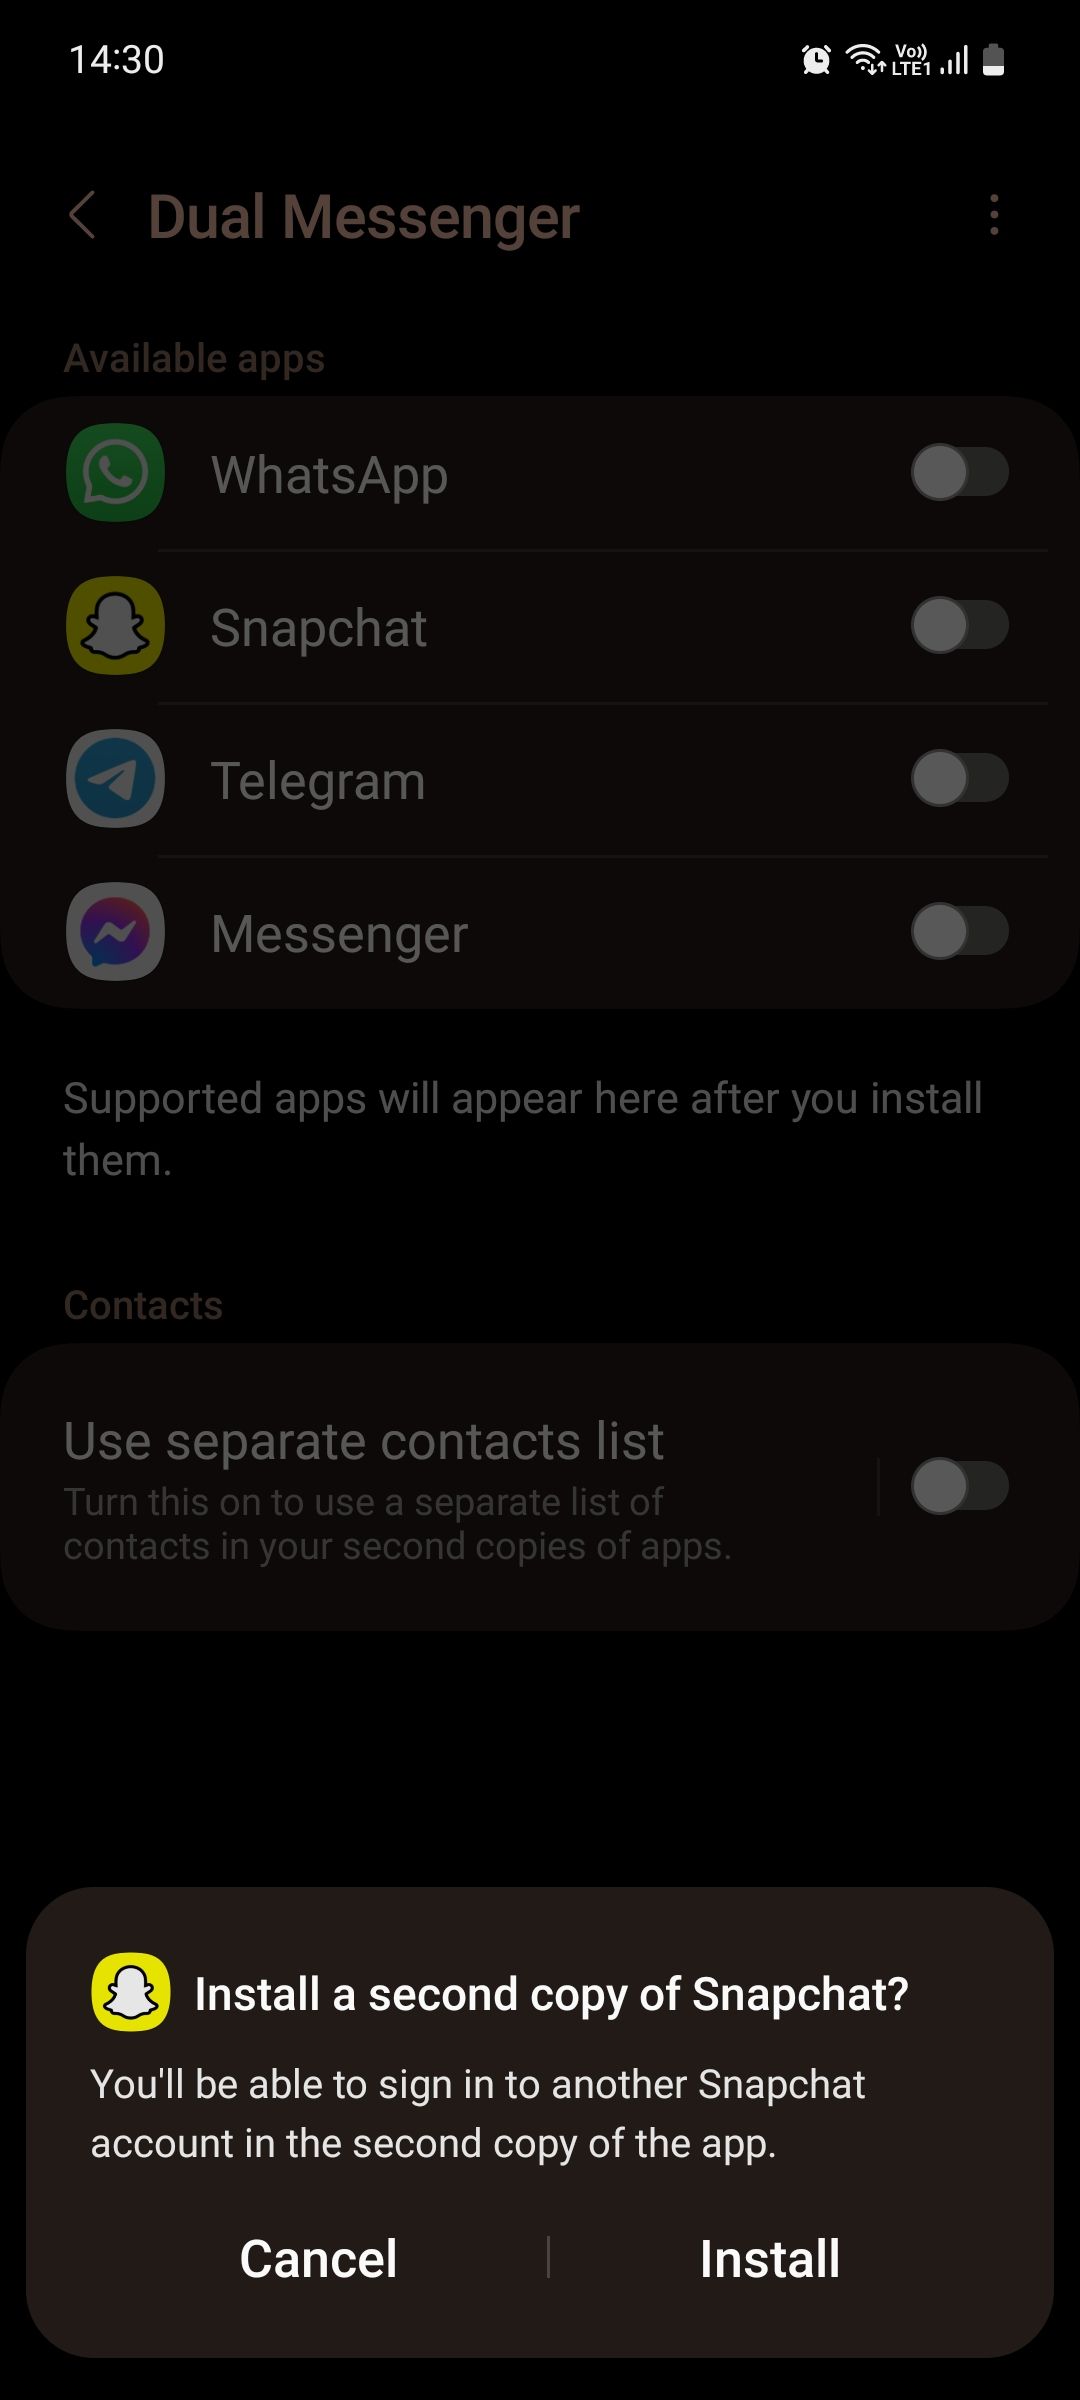 Samsung Dual Messenger menu